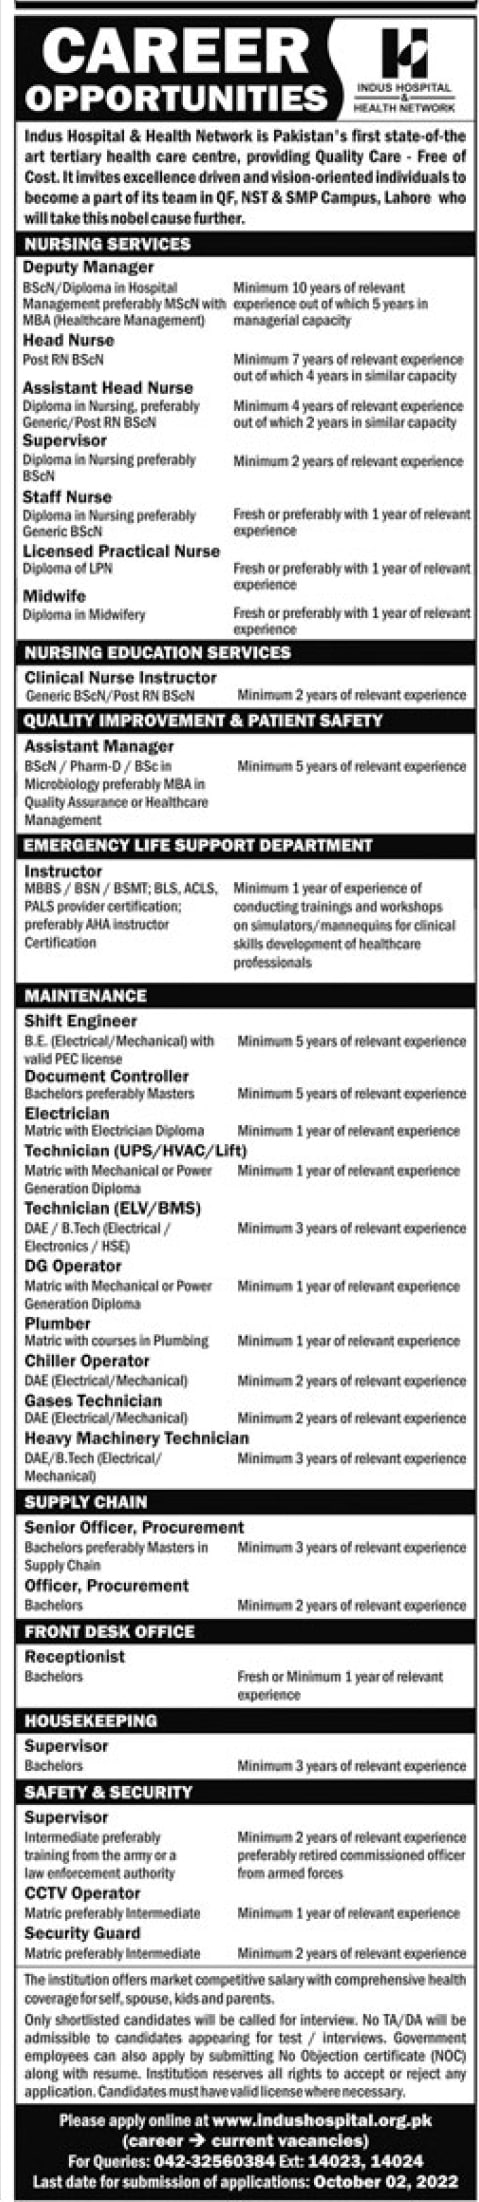 Indus Hospital & Health Network Jobs 2022 All Advertisements